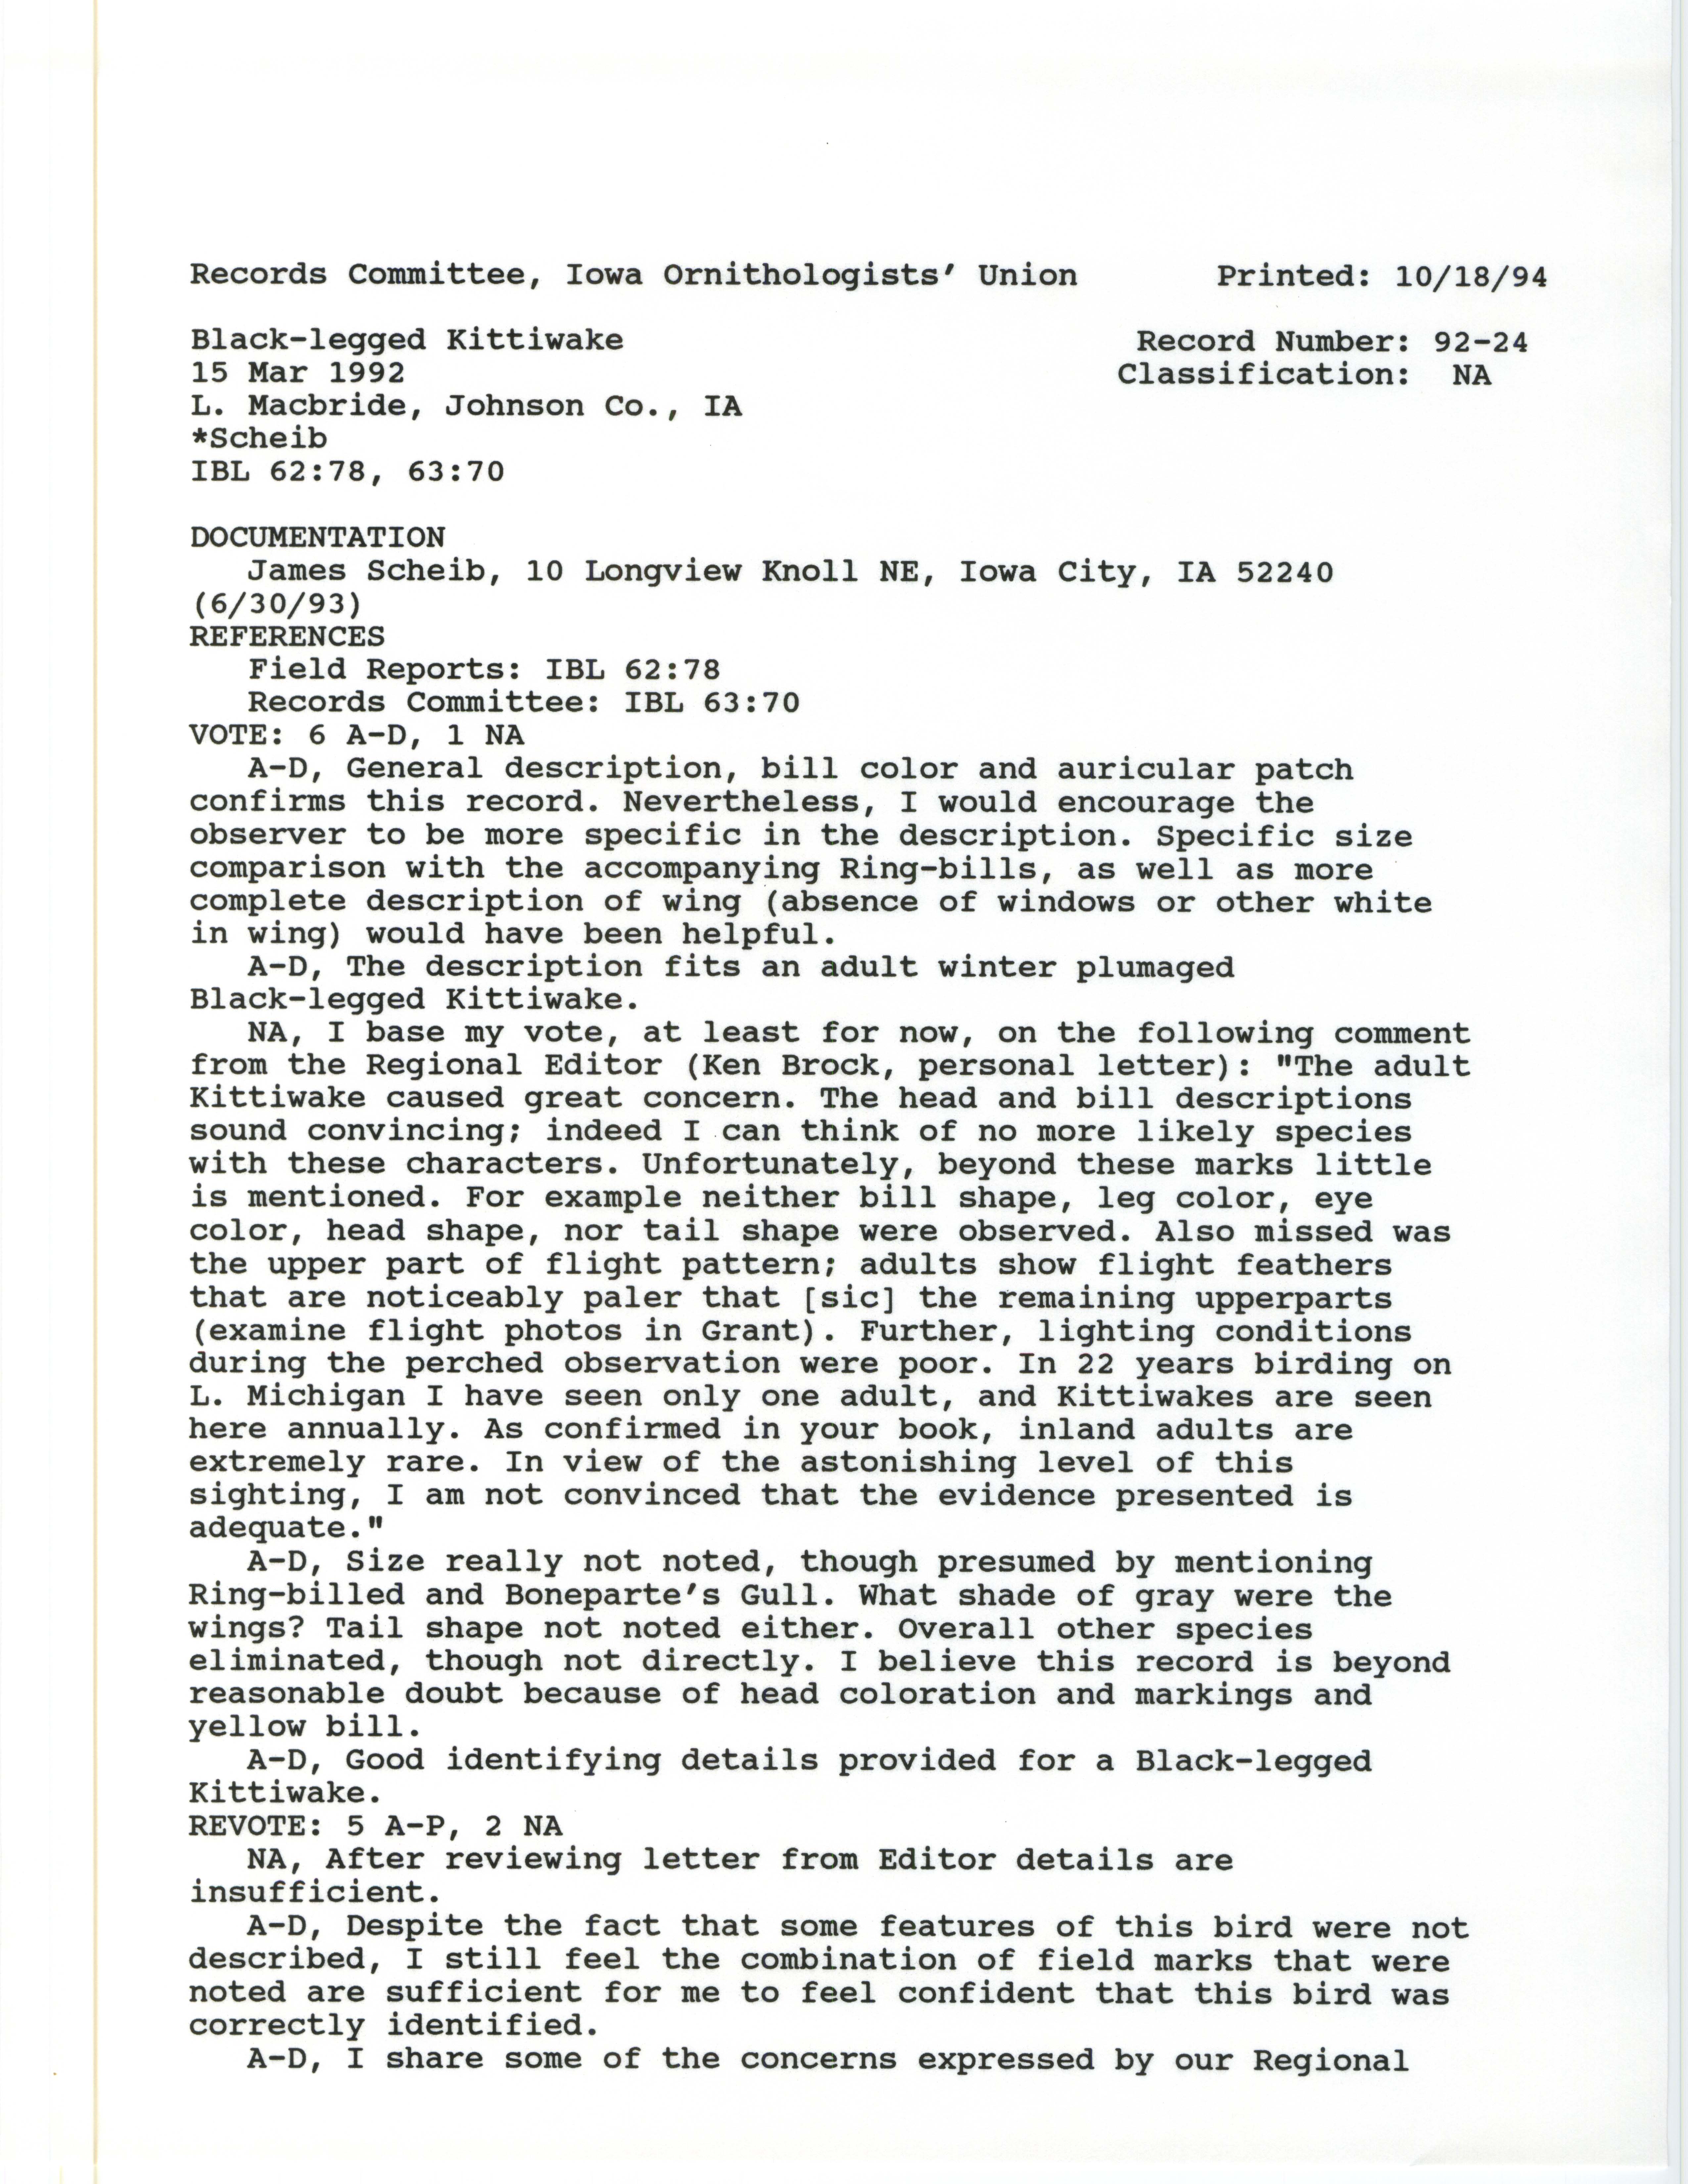 Records Committee review for rare bird sighting of Black-legged Kittiwake at Lake Macbride, 1992